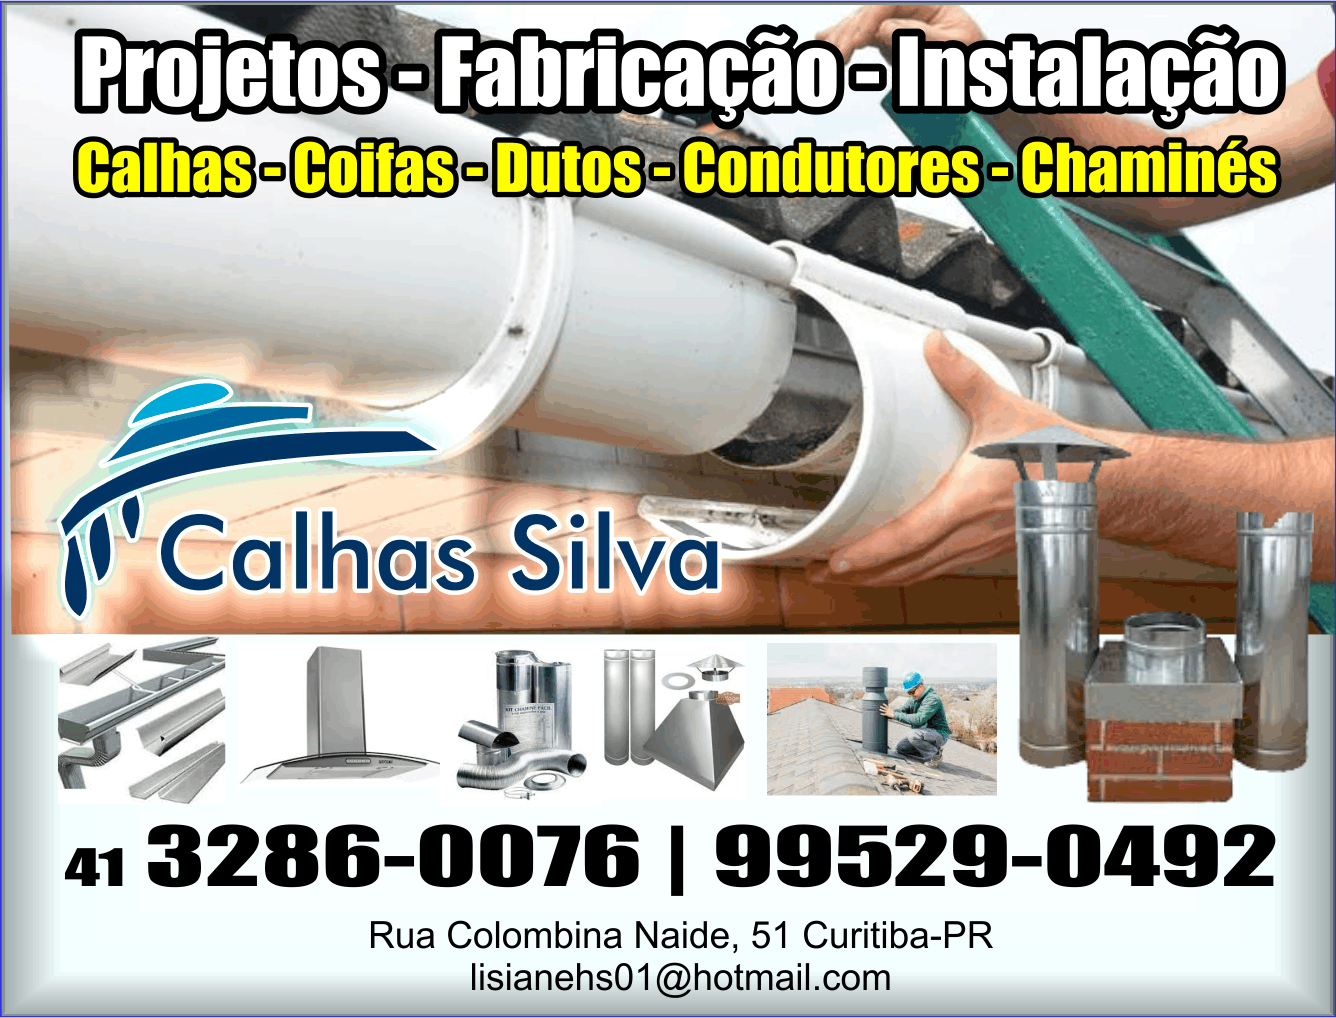 Calhas Silva      RUA COLOMBINA NAIDE, 251, CURITIBA - PR  Fones: (41) 3286-0076 / (41) 99529-0592